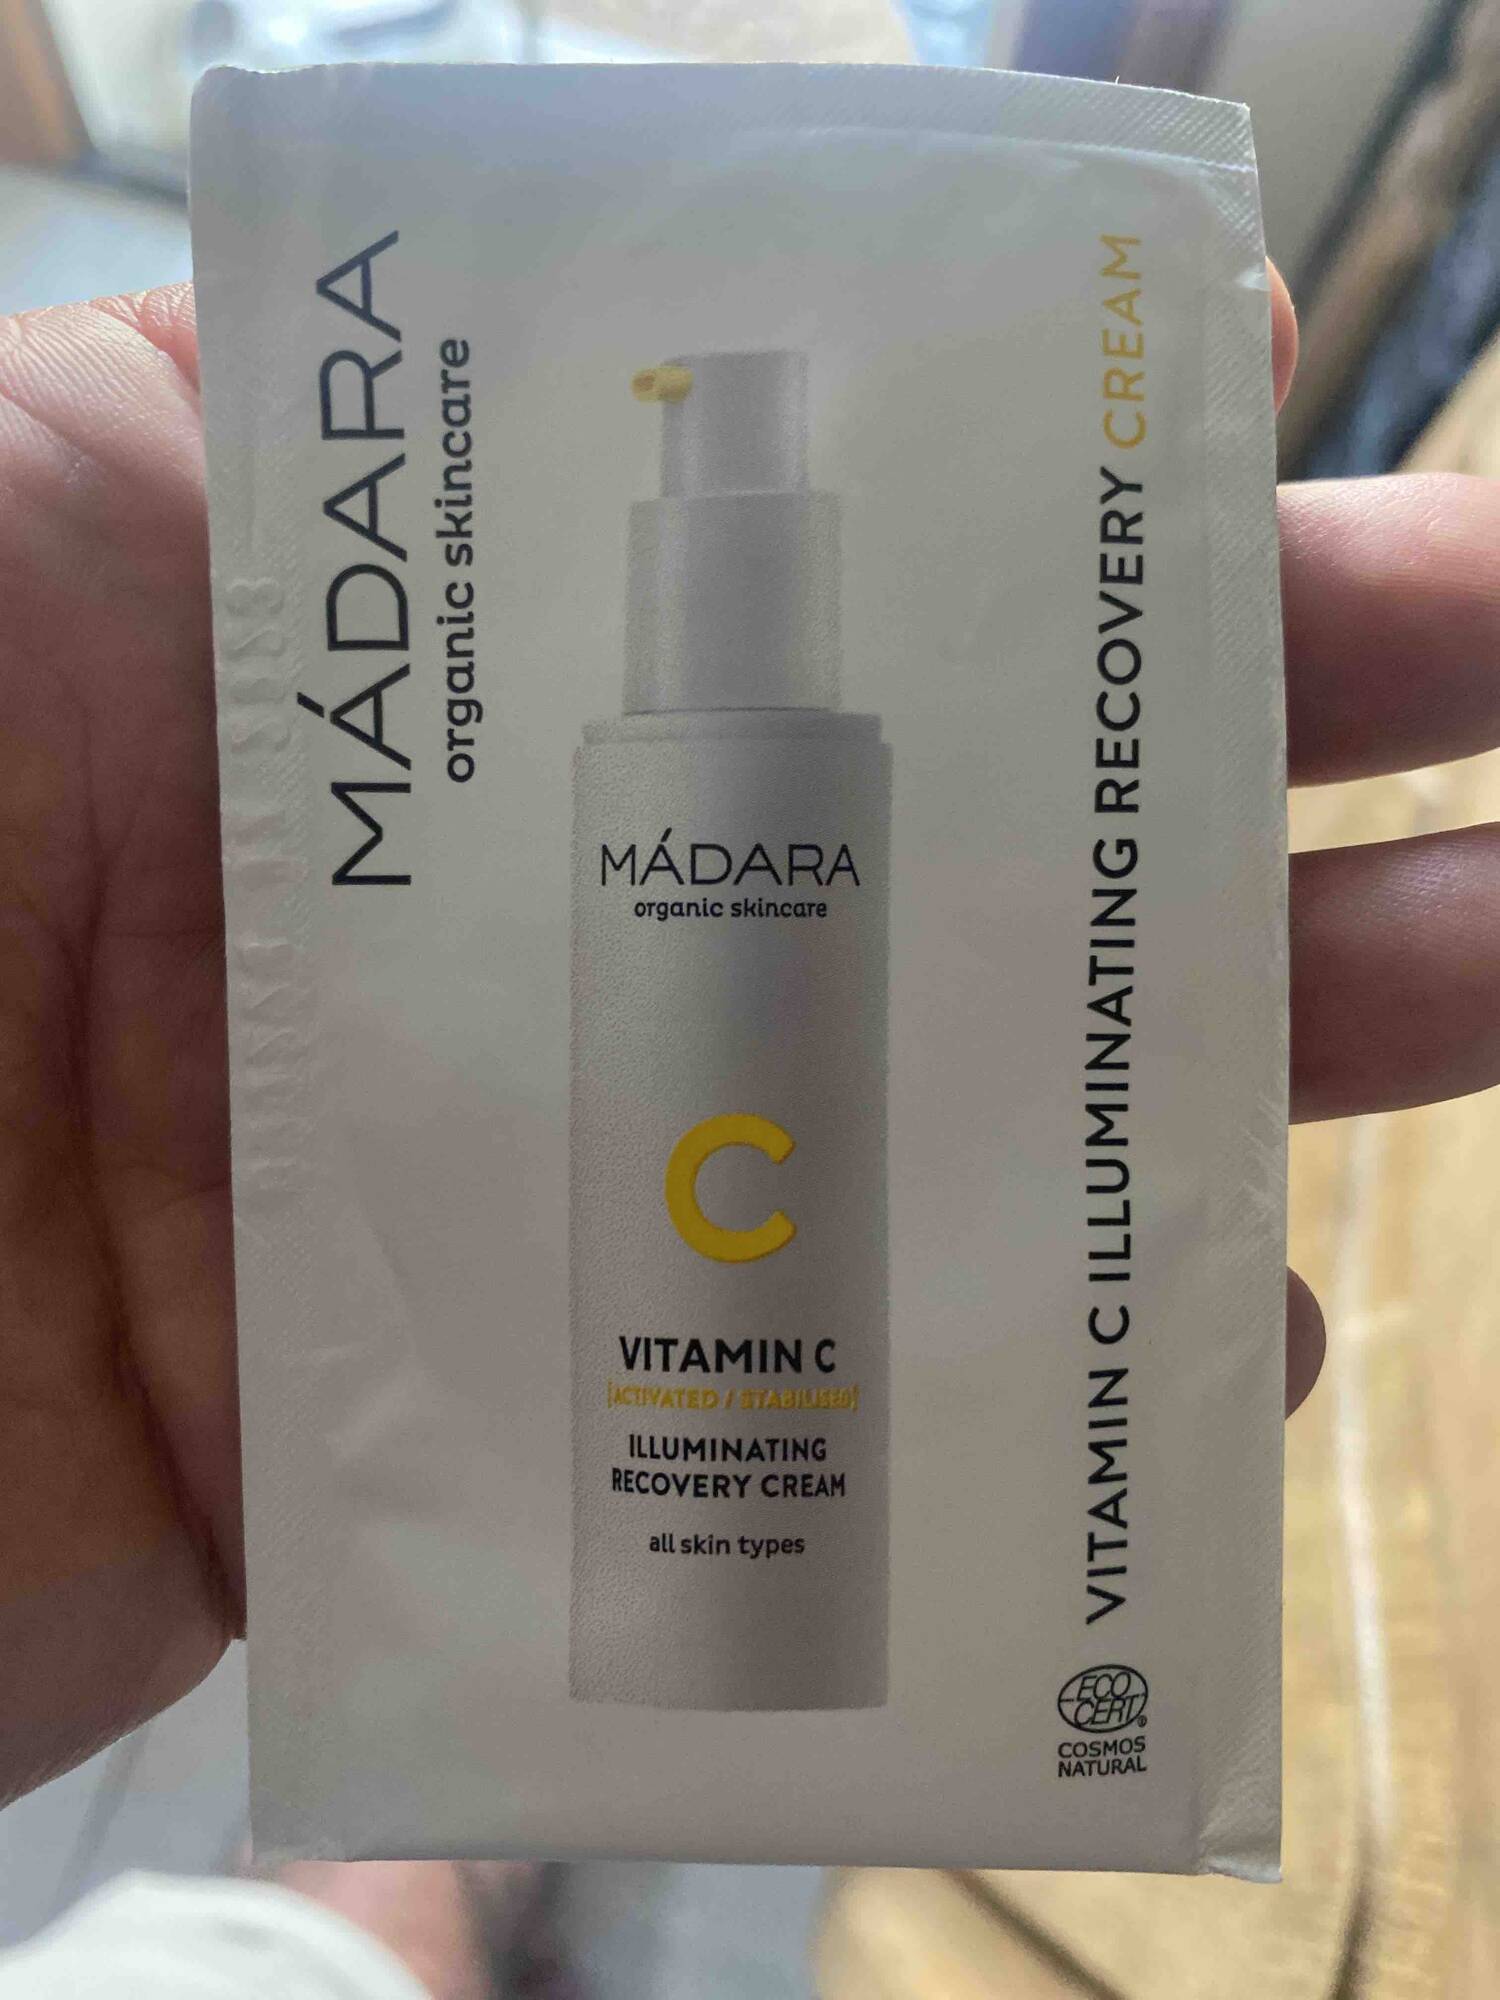 MÁDARA - Vitamin C illuminating recovery cream